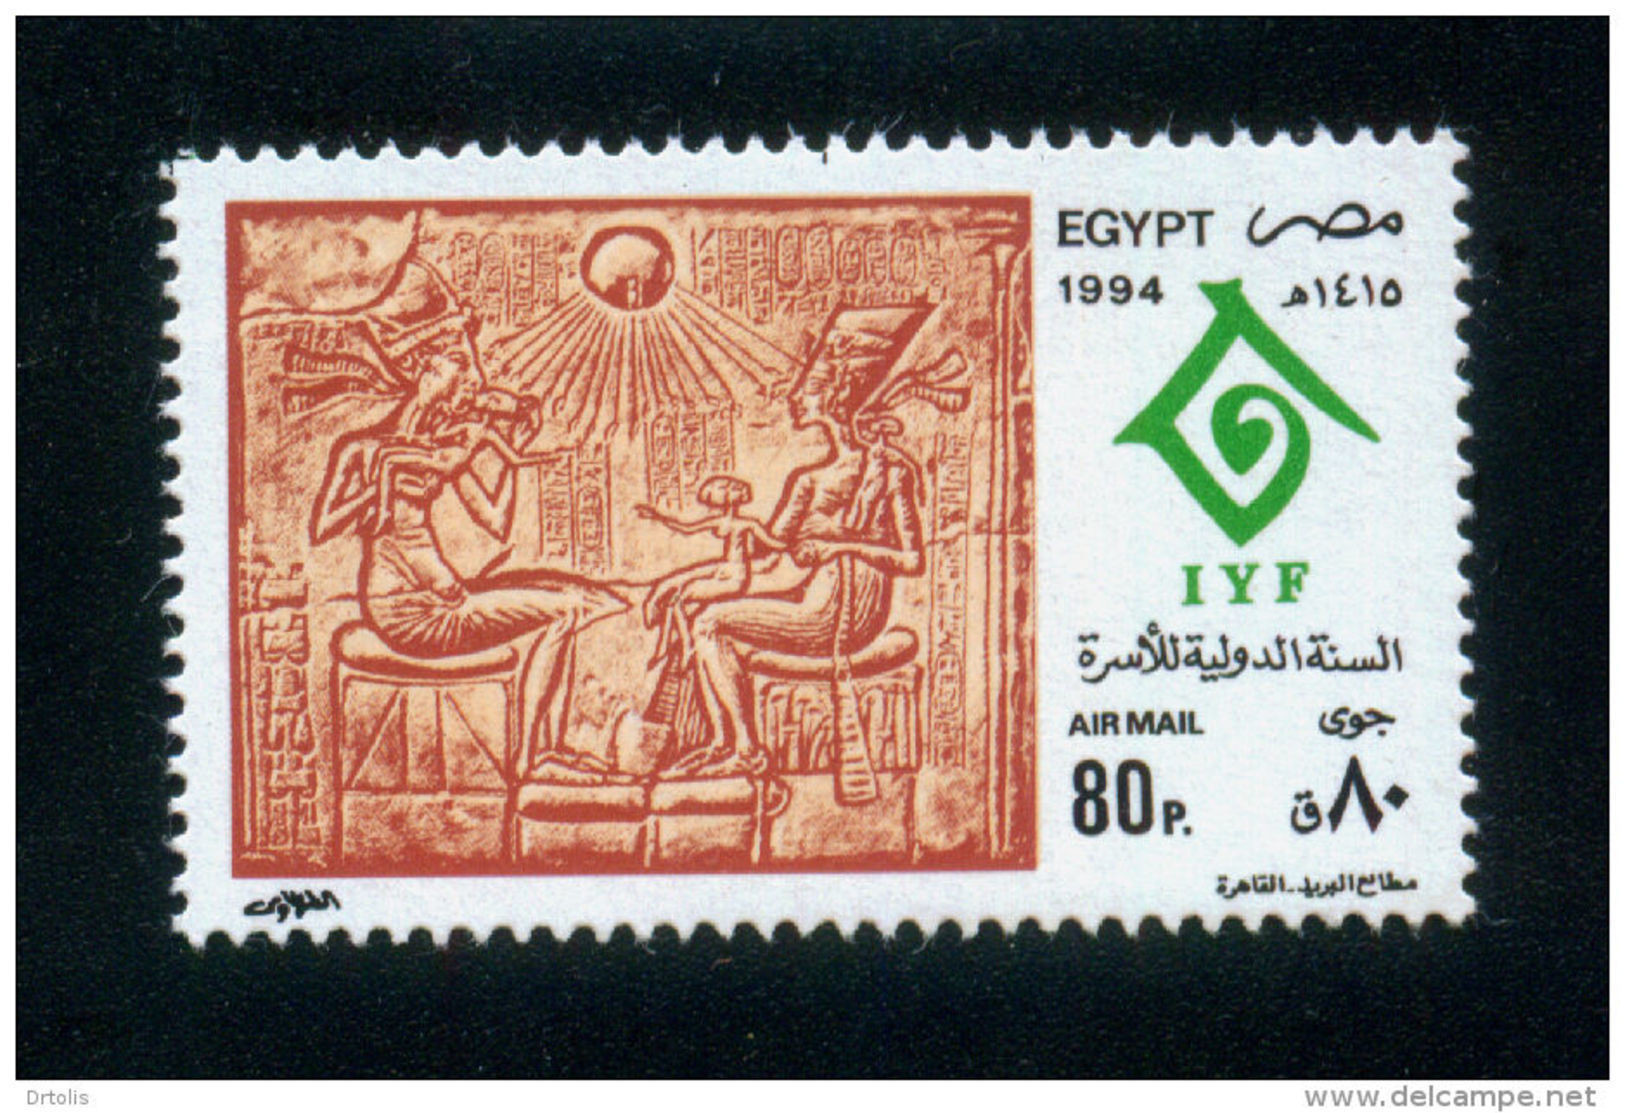 EGYPT / 1994 / UN / UN'S DAY / IYF/ INTL YEAR OF THE FAMILY / EGYPTOLOGY / AKHENATEN ; NEFERTITI & CHILDREN / MNH / VF - Ongebruikt